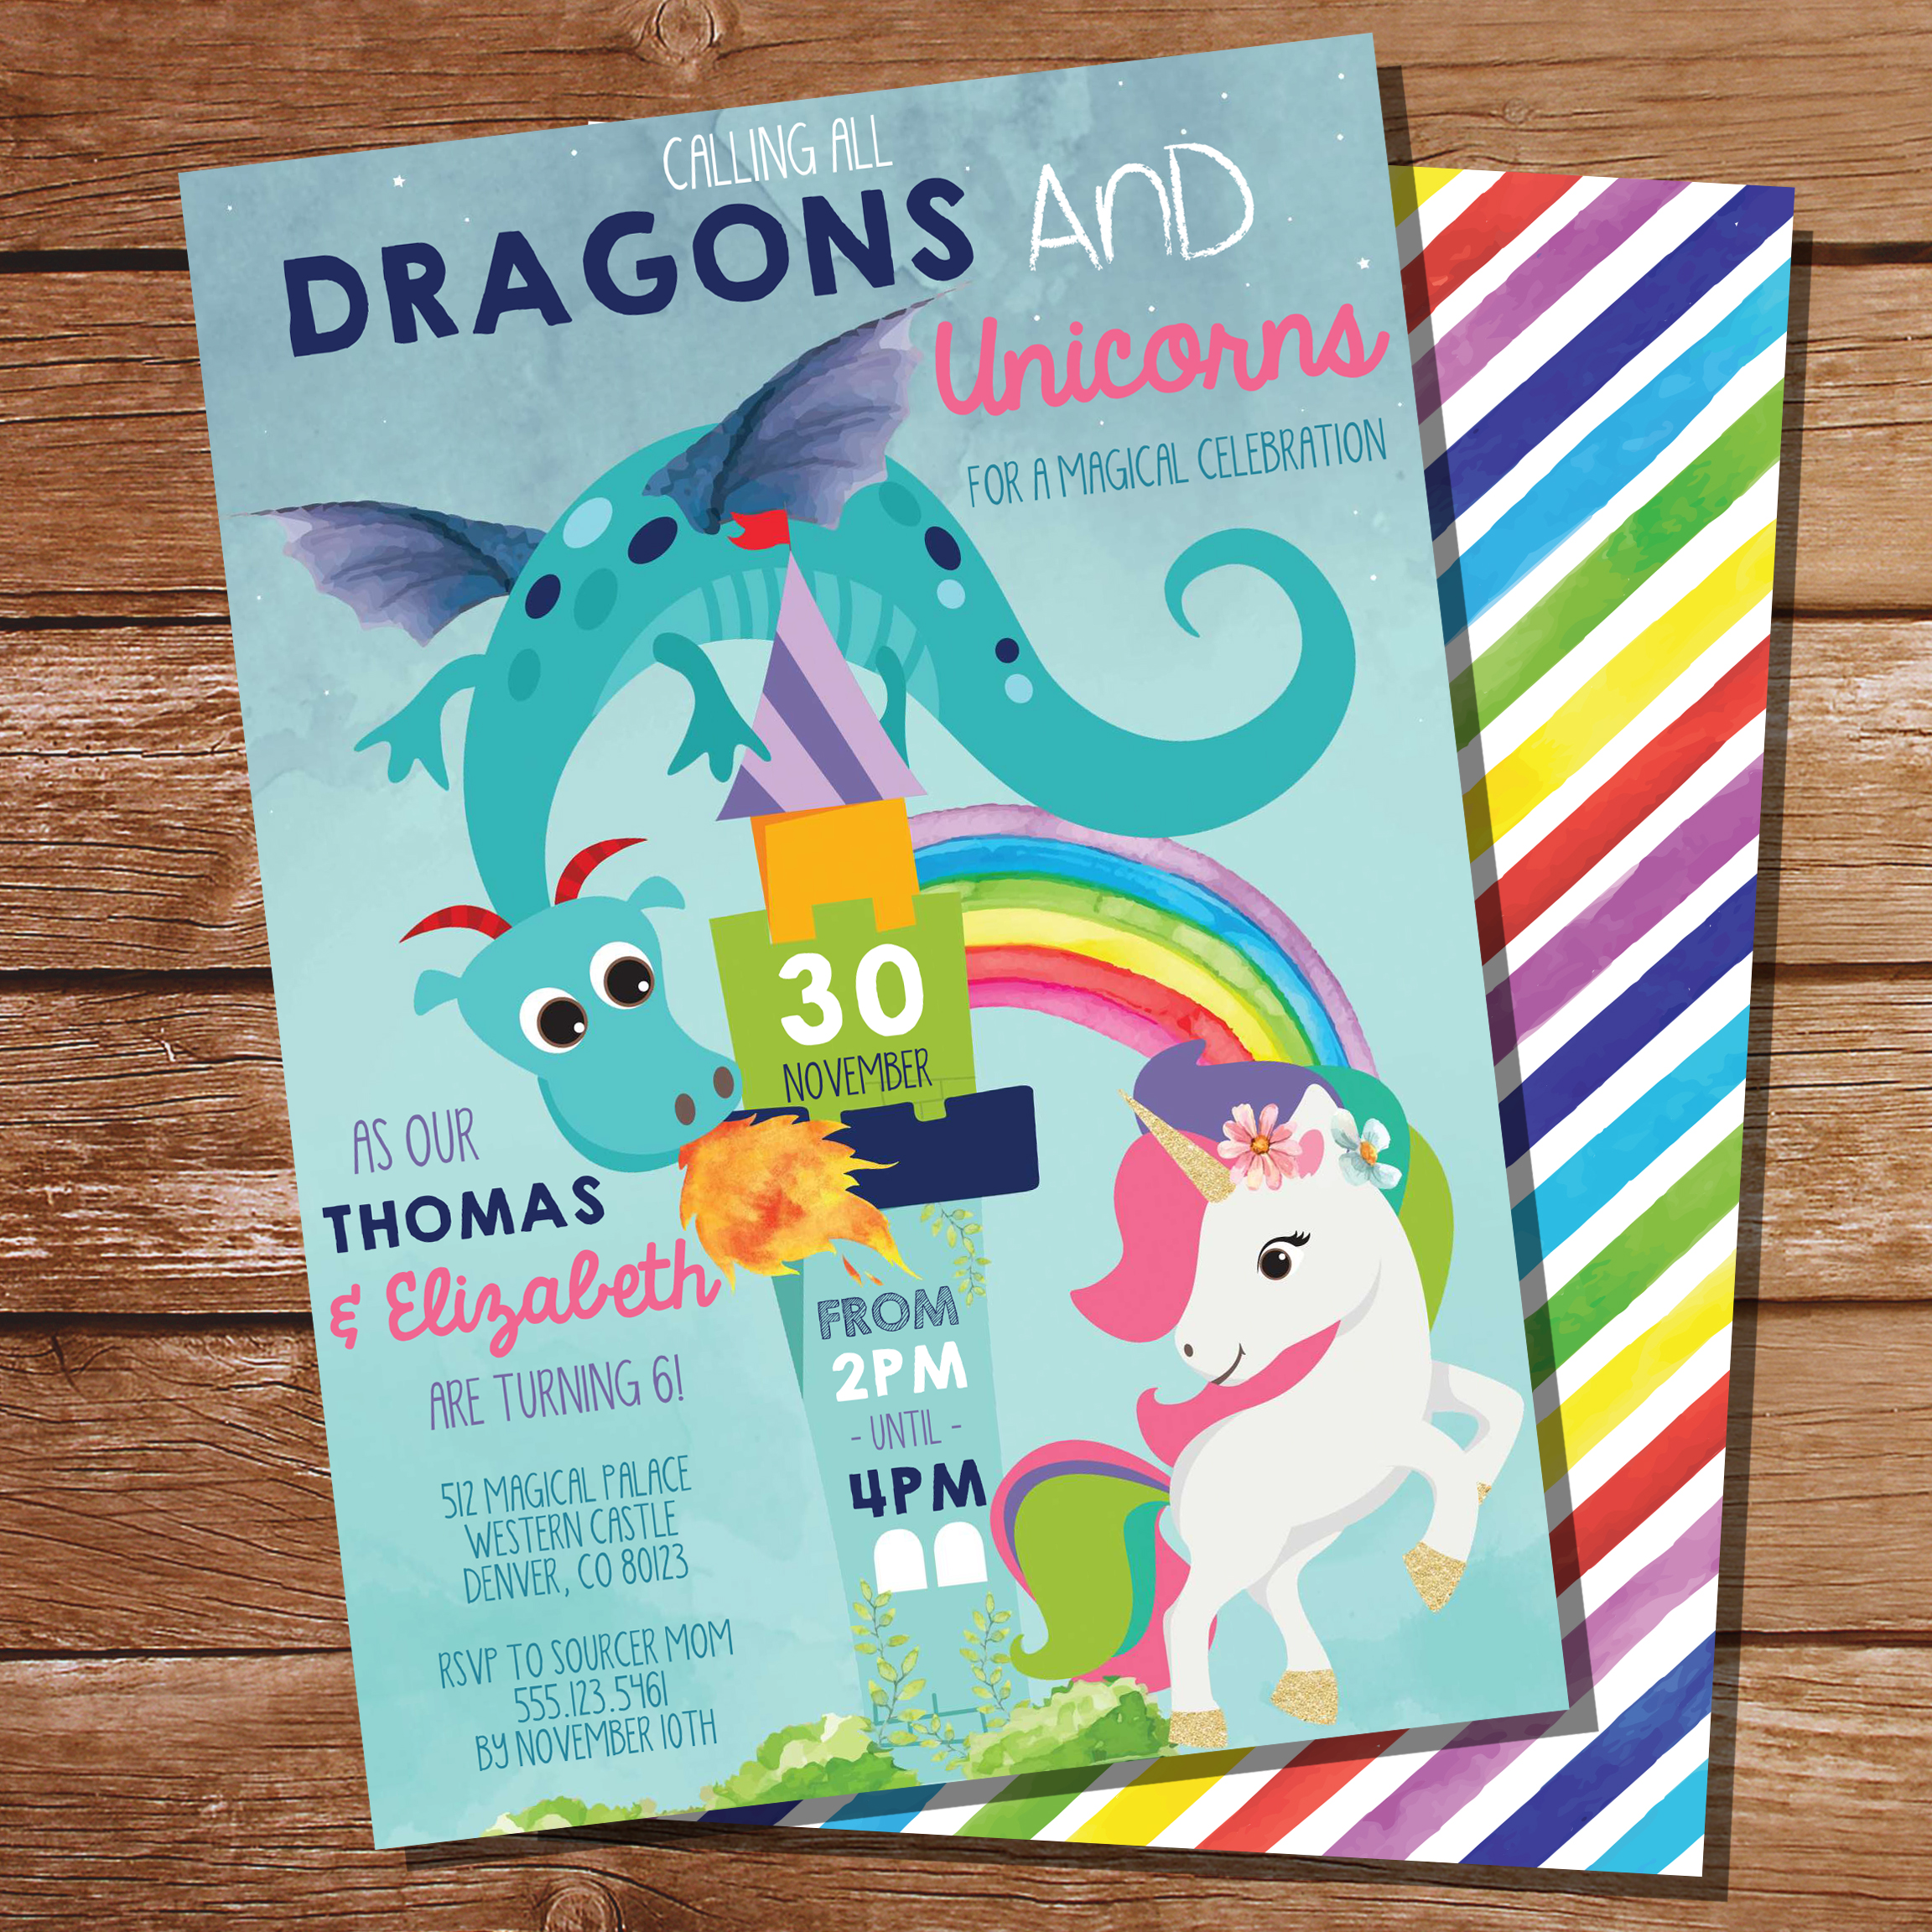 Gorgeous Dragons and Unicorns Editable Party Invitation